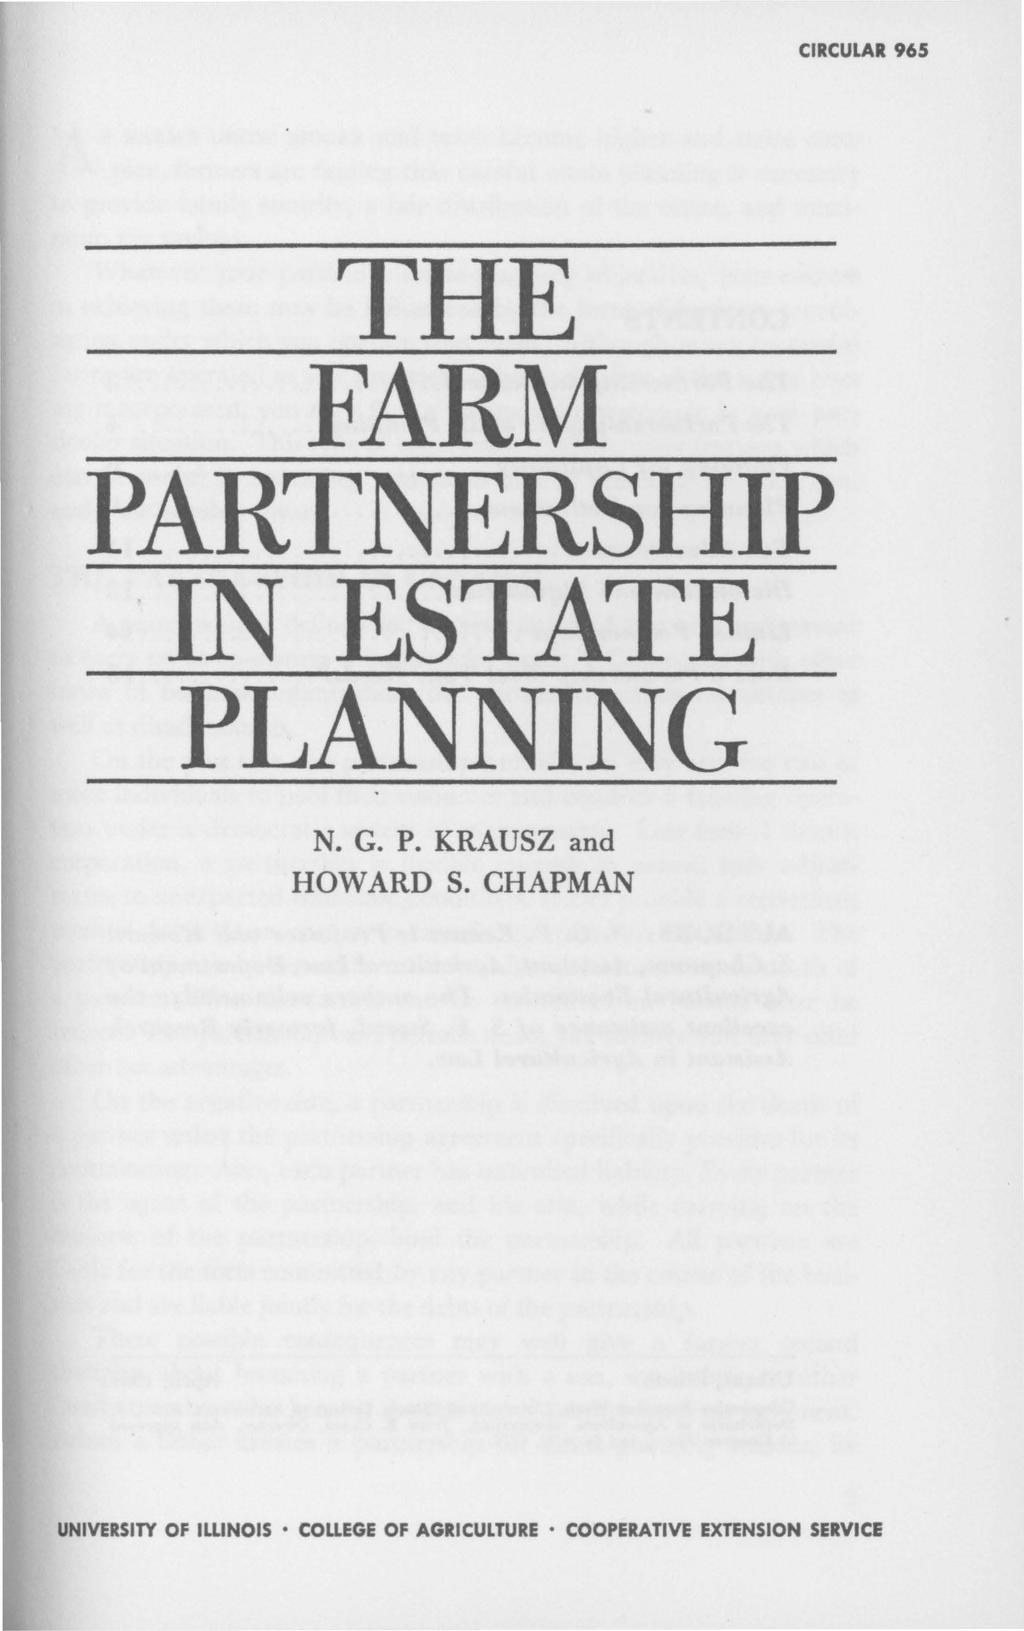 CIRCULAR 965 THE FARM PARTNERSHIP IN ESTATE PLANNING N. G. P. KRAUSZ and HOWARD S.